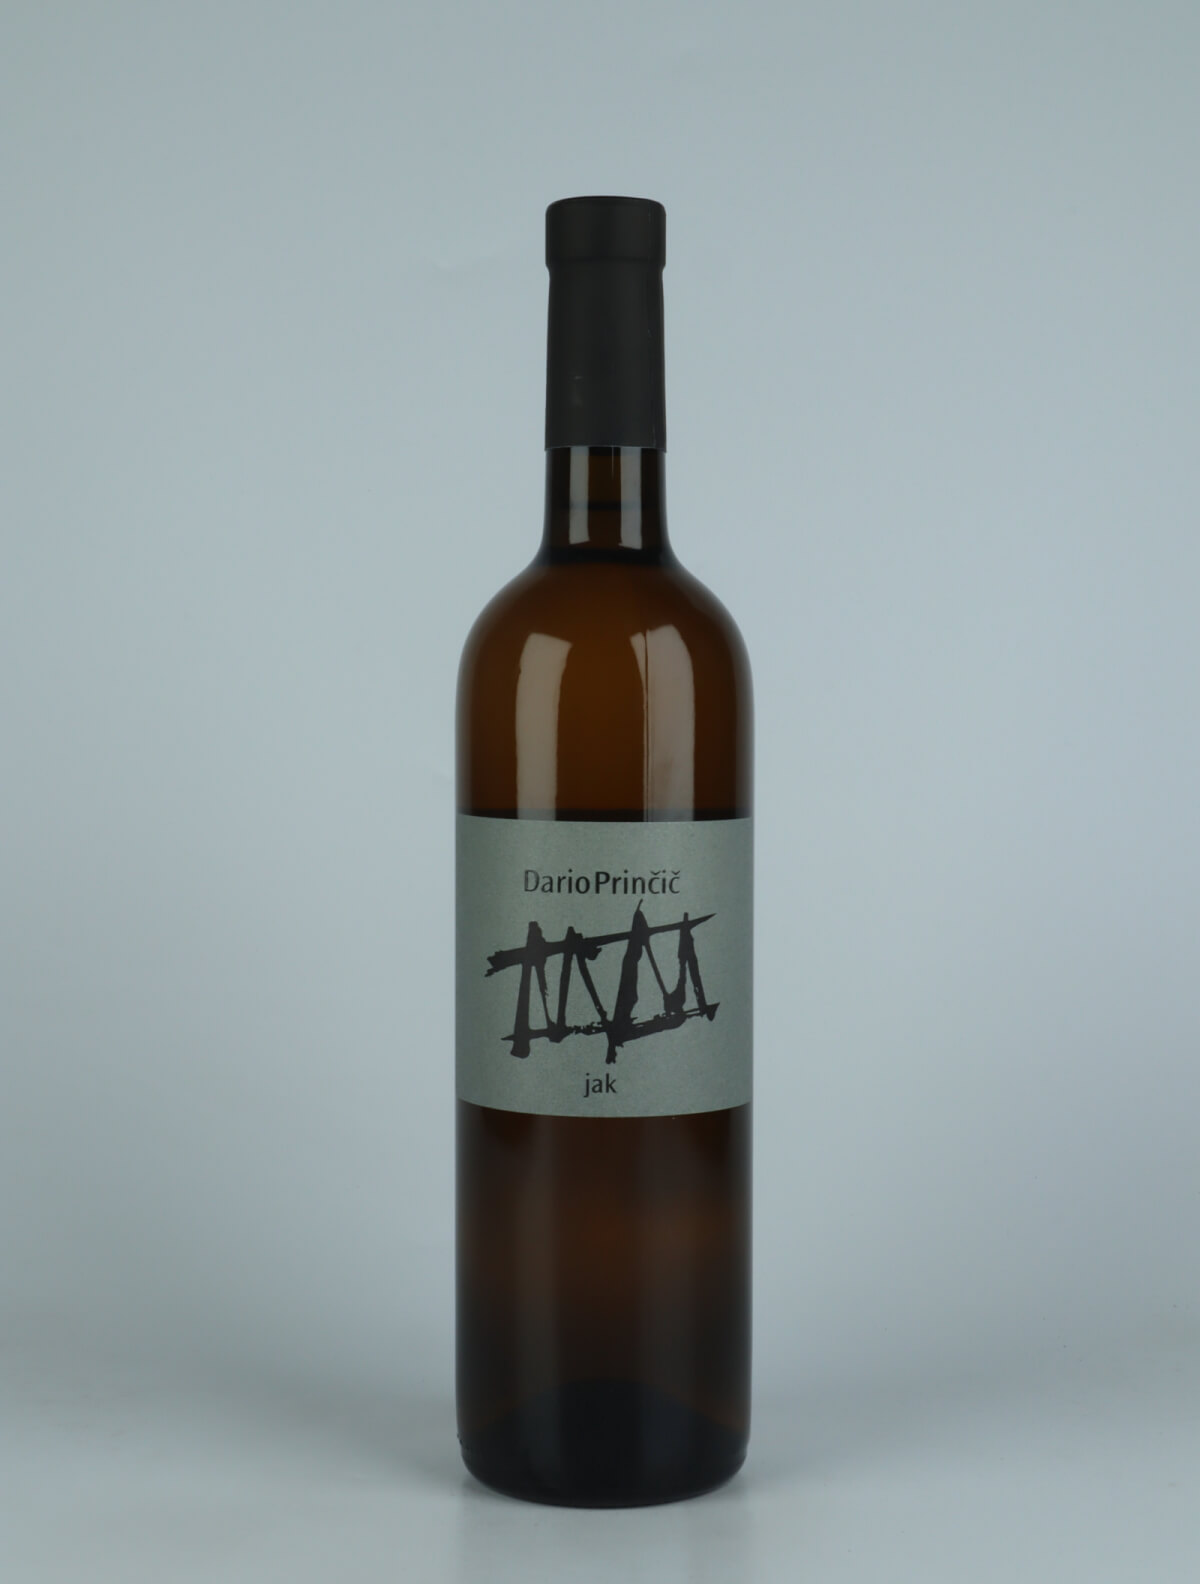 A bottle 2020 Jak Orange wine from Dario Princic, Friuli in Italy